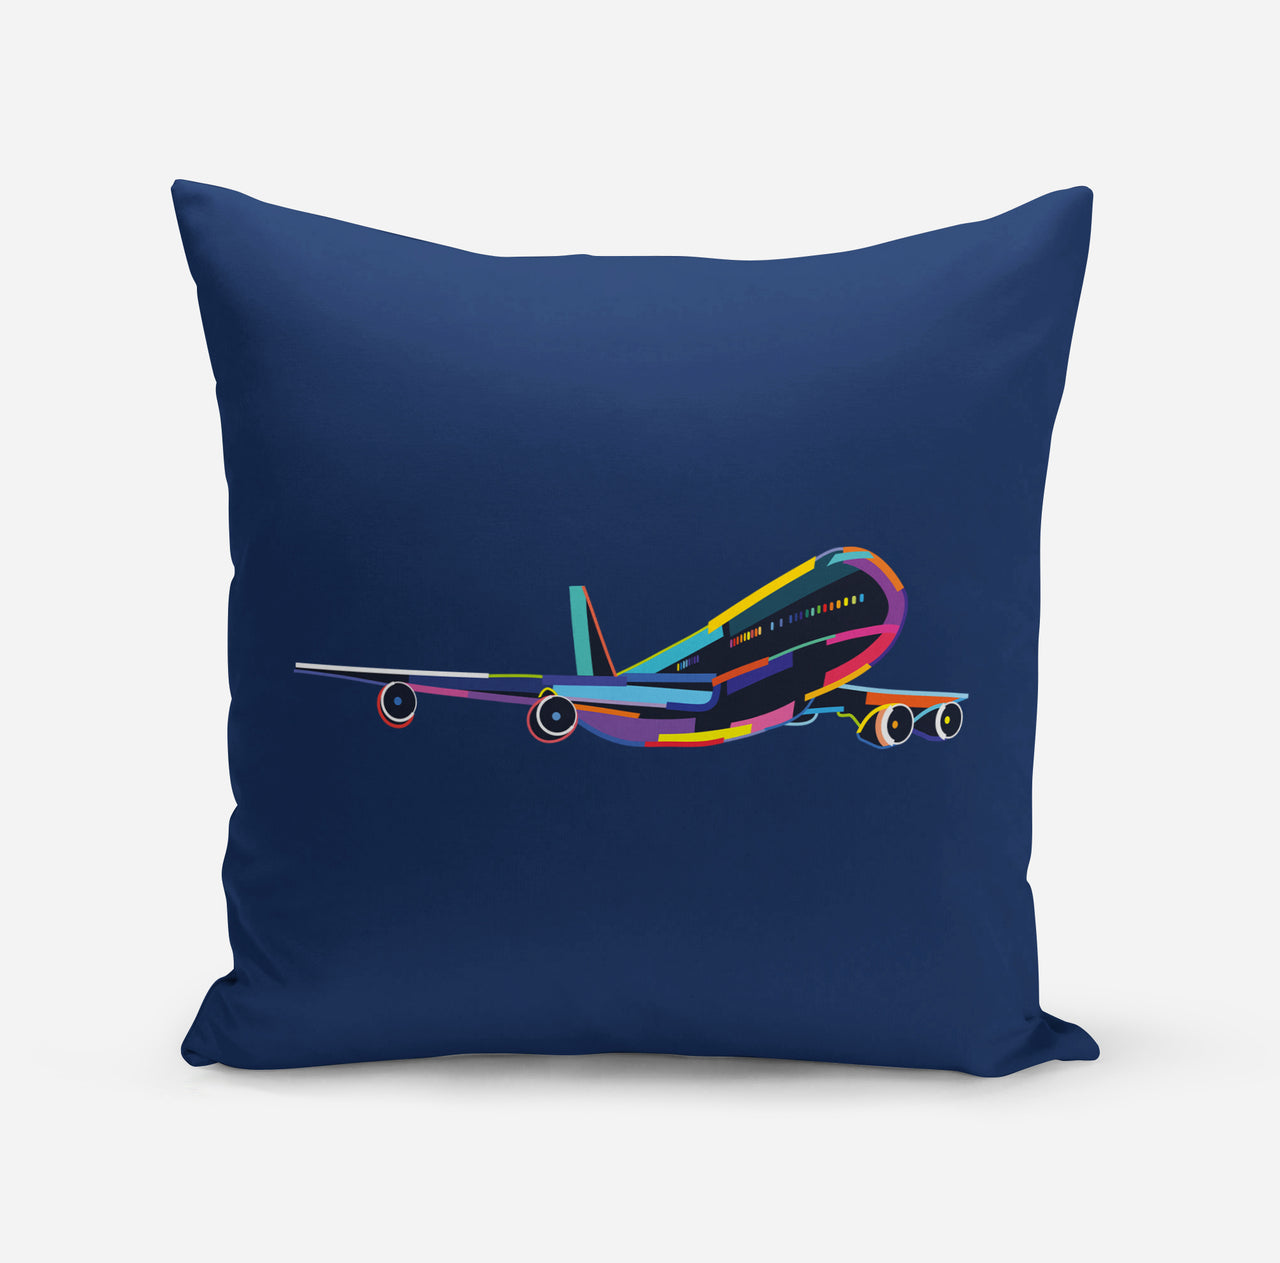 Multicolor Airplane Designed Pillows